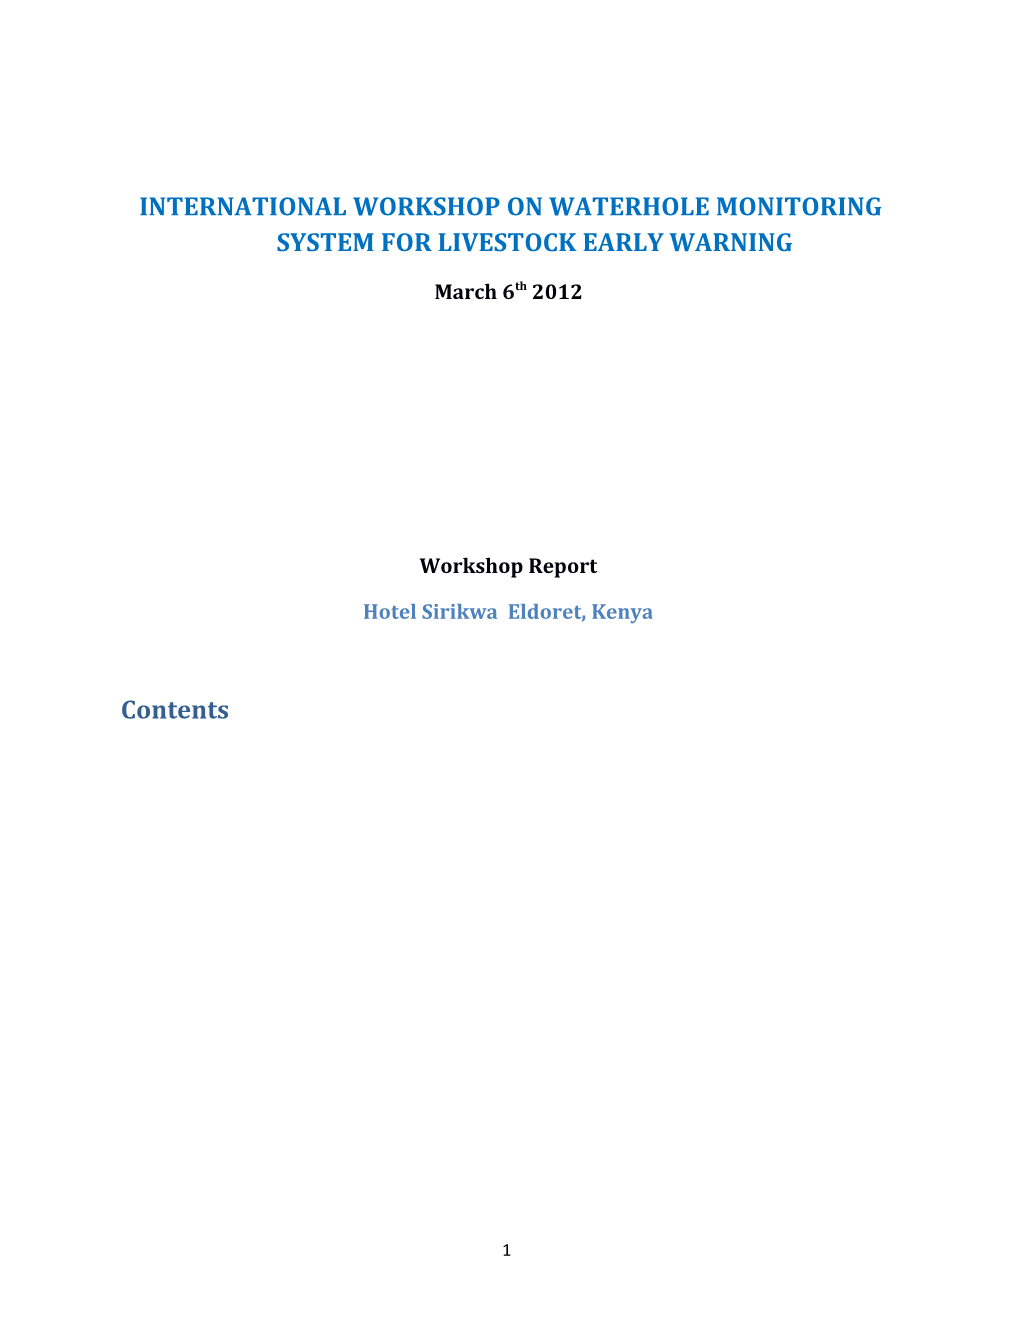 International Workshop on Waterhole Monitoring System for Livestock Early Warning